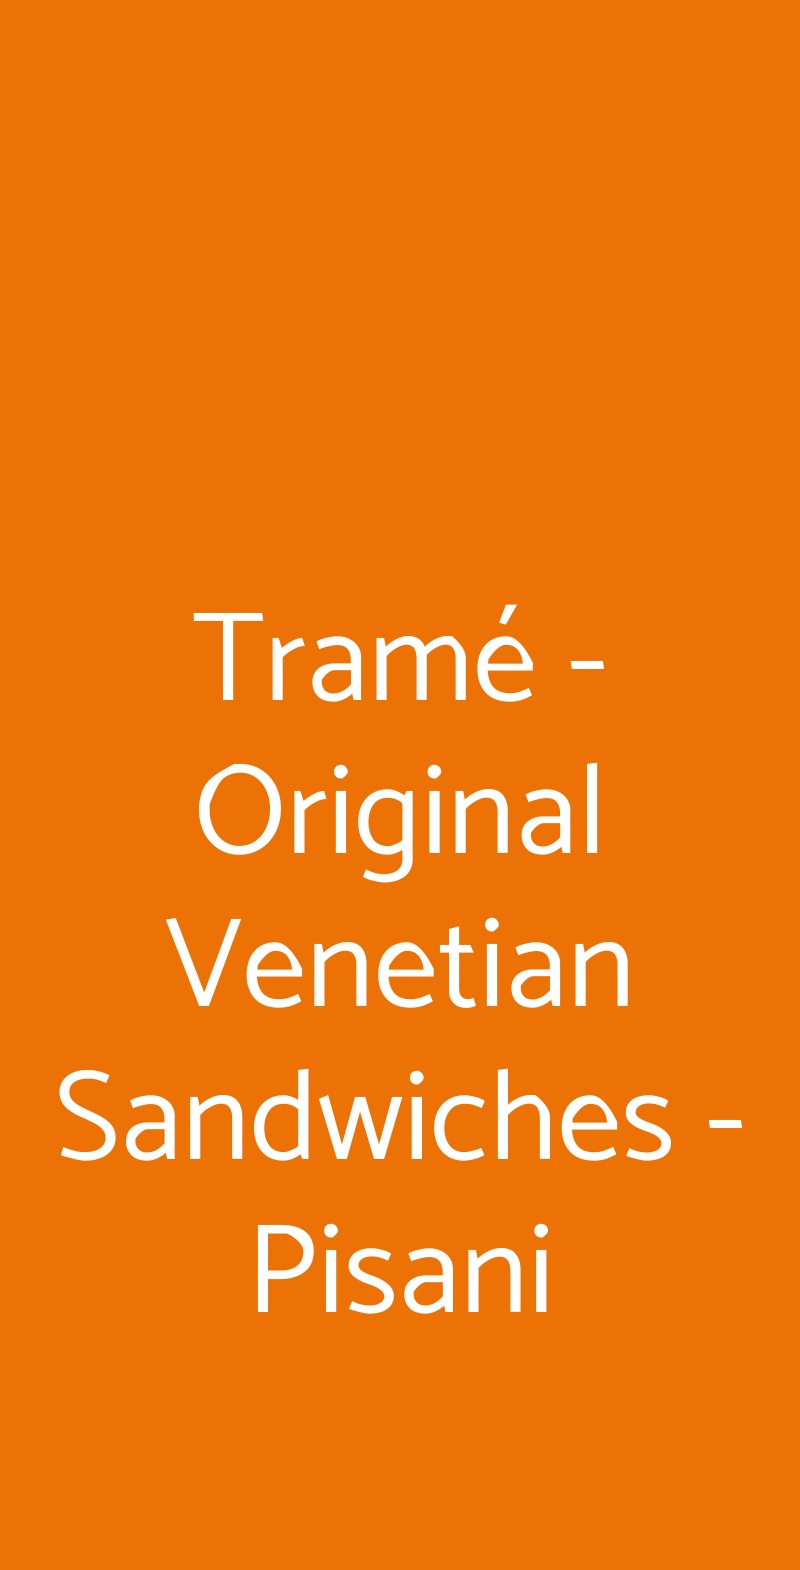 Tramé - Original Venetian Sandwiches - Pisani Milano menù 1 pagina